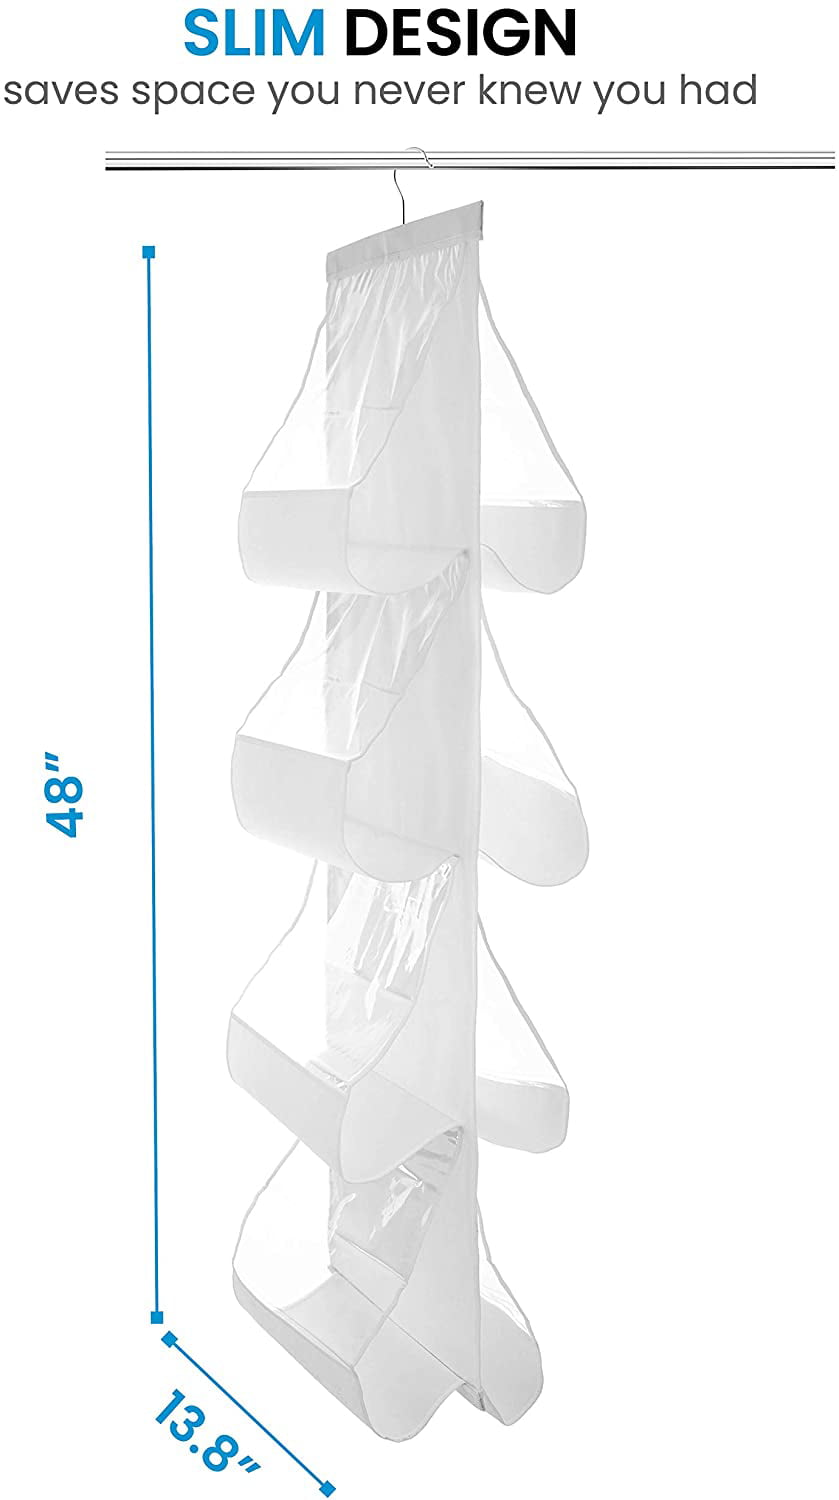 48 H. 8 Pocket White Nonwoven Hanging Purse Organizer - 30 wide